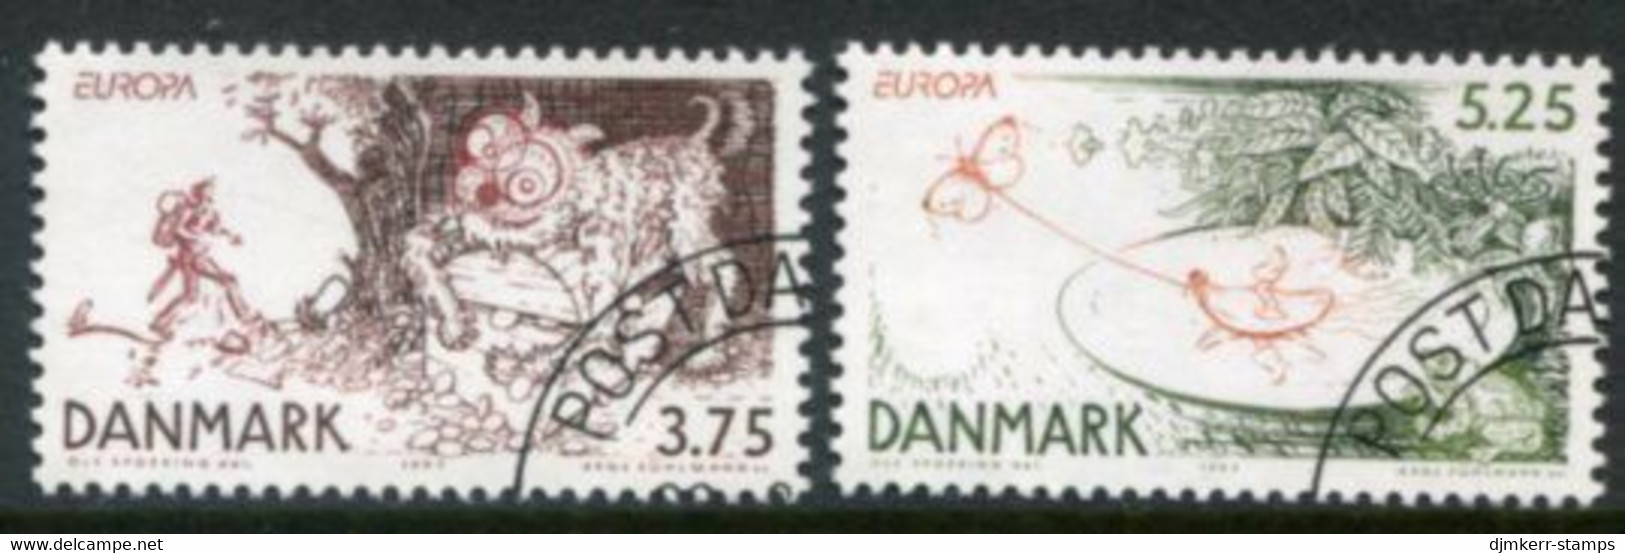 DENMARK 1997 Europa: Sagas And Legends Used.  Michel 1162-63 - Gebruikt